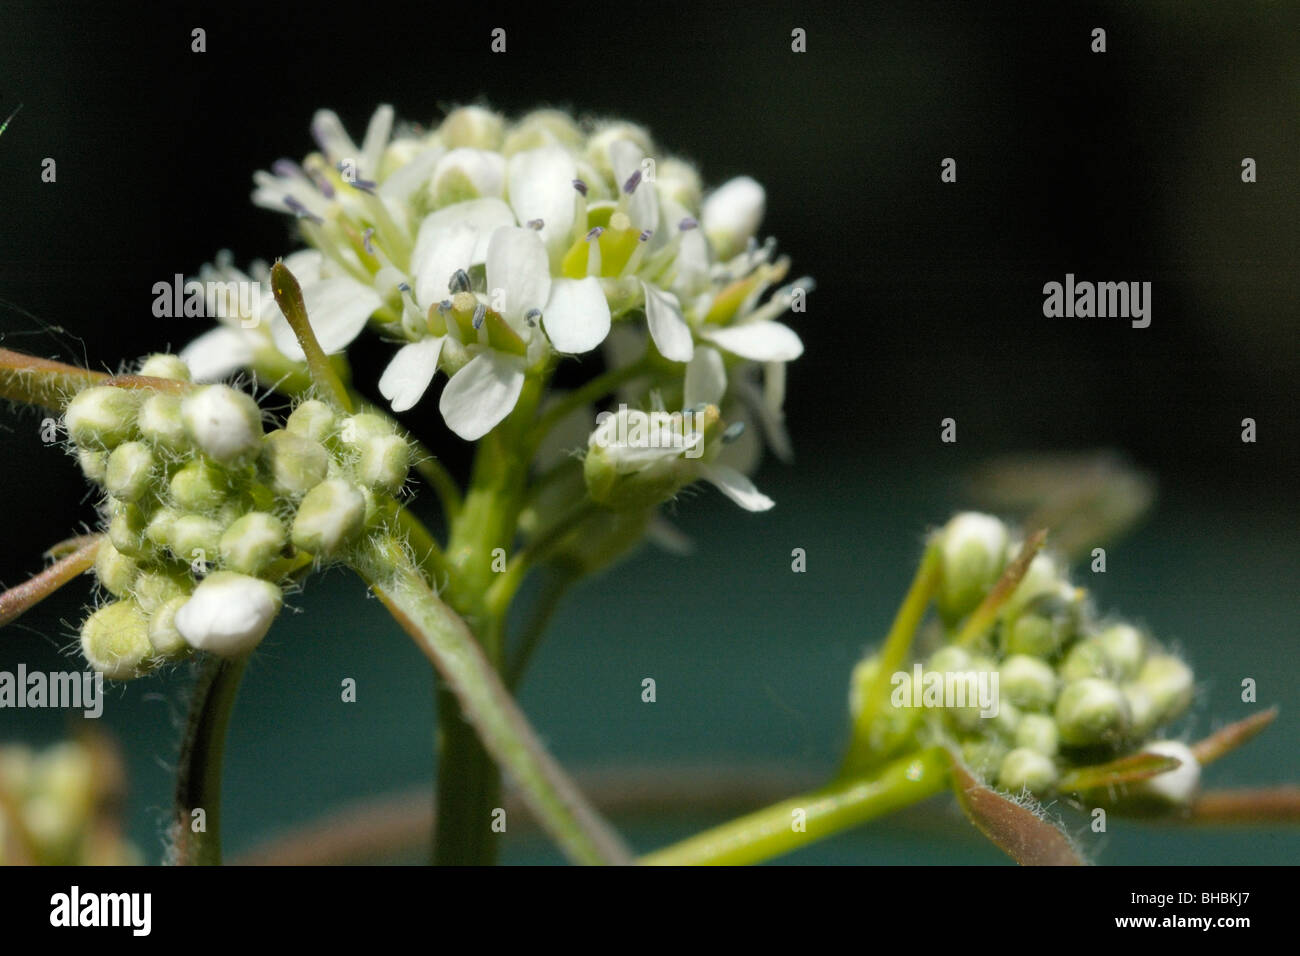 Garden Cress, lepidium sativum Stock Photo